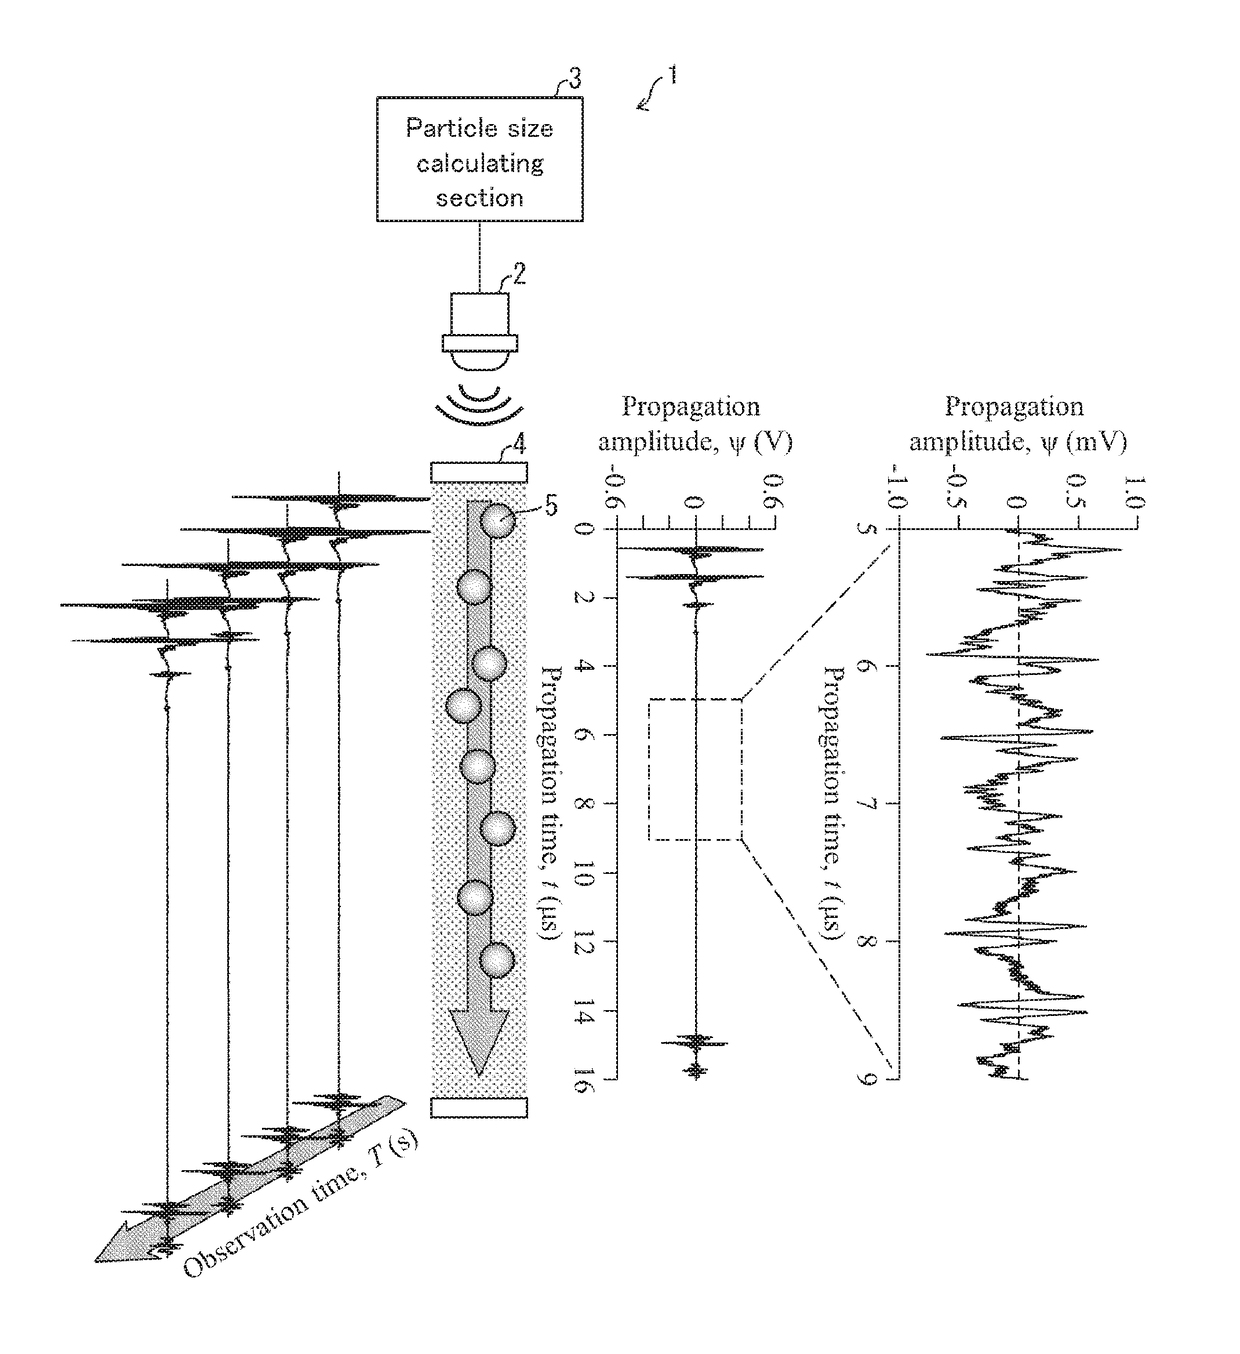 Ultrasonic particle size measurement device and ultrasonic measurement device